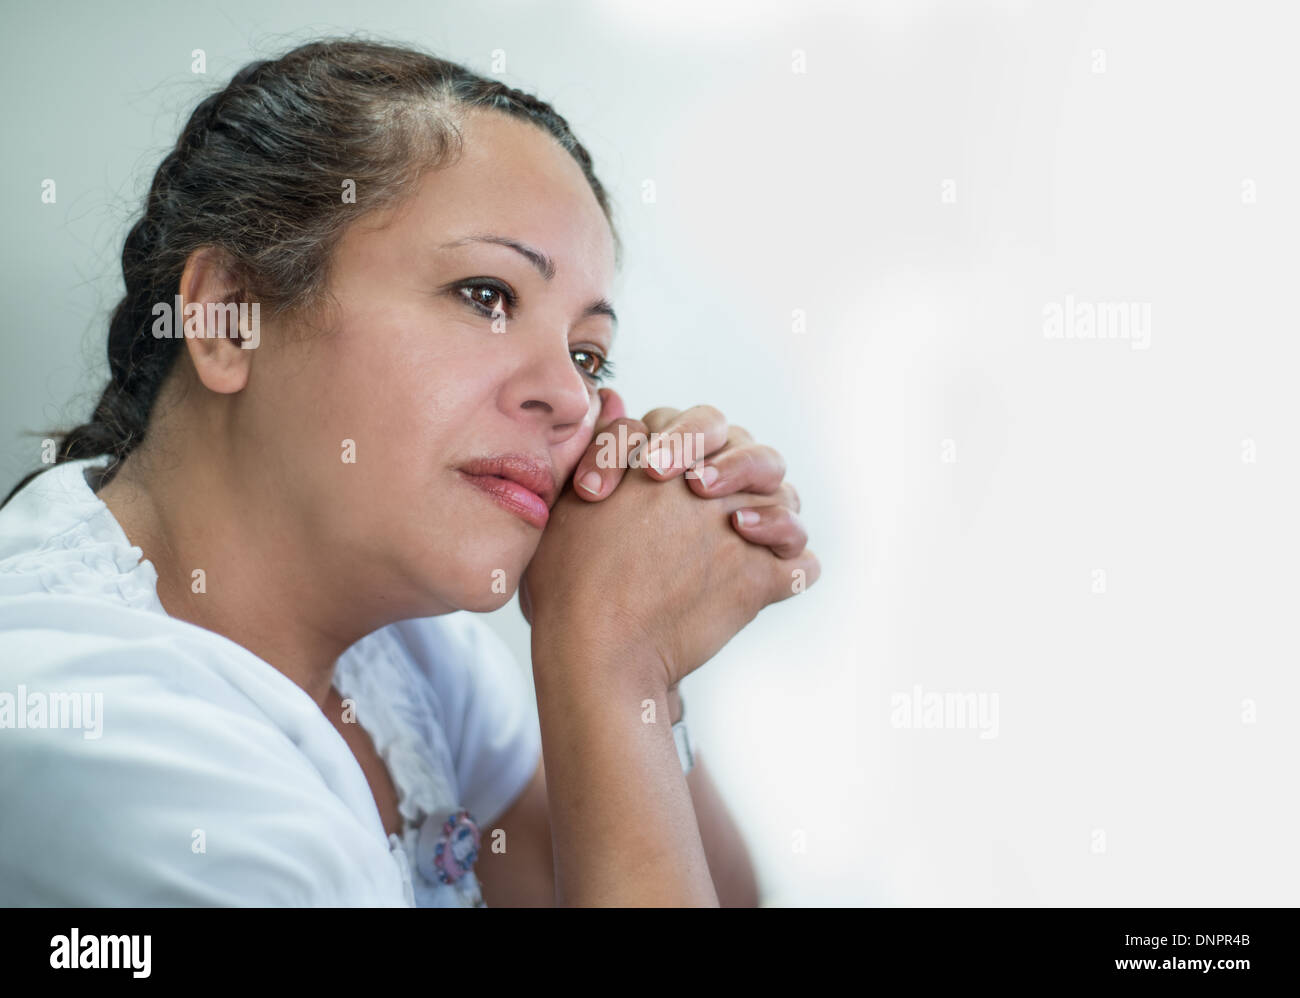 Contemplative Hispanic Woman against a light background Stock Photo